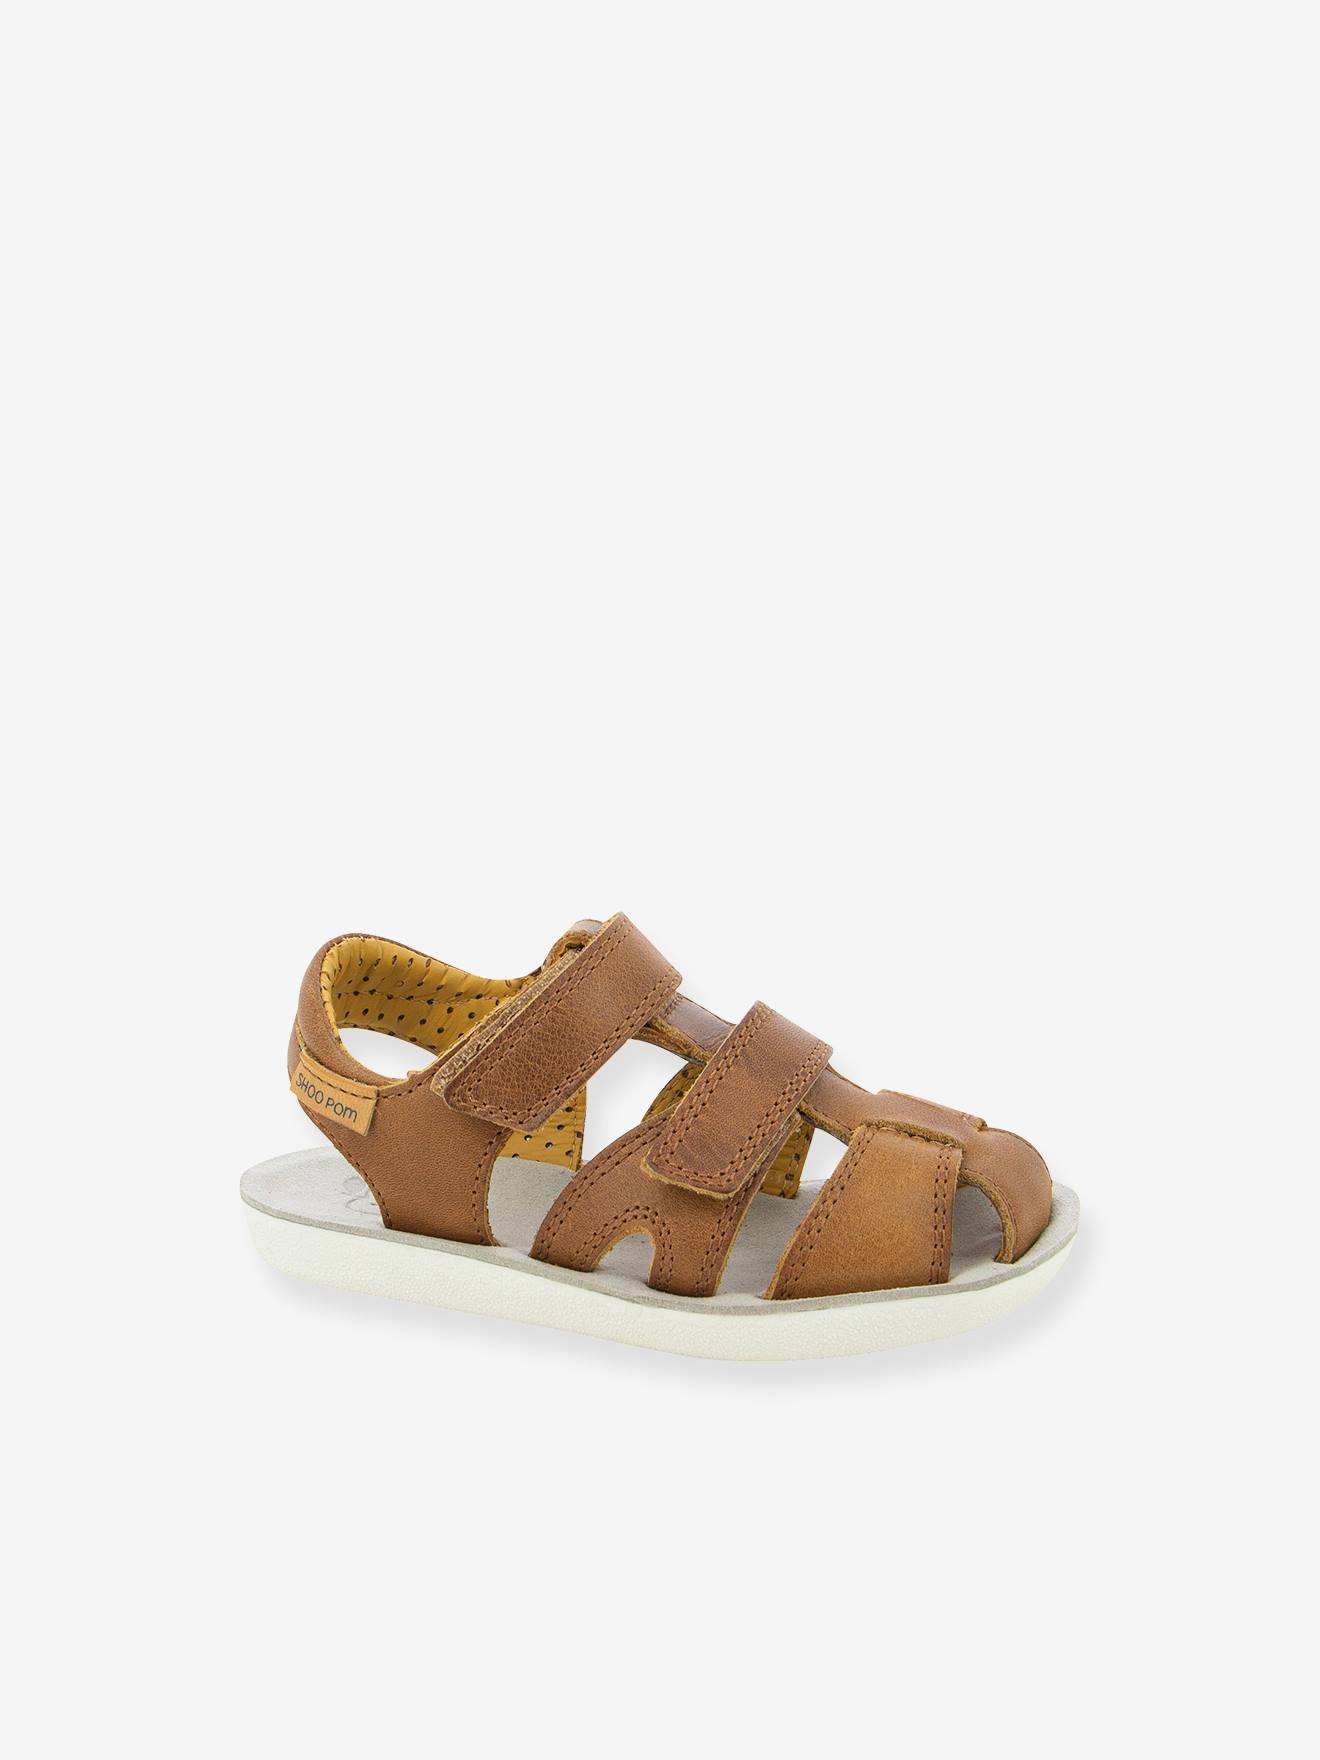 Sandals for Children, Goa Newby SHOO POM(r) dark brown